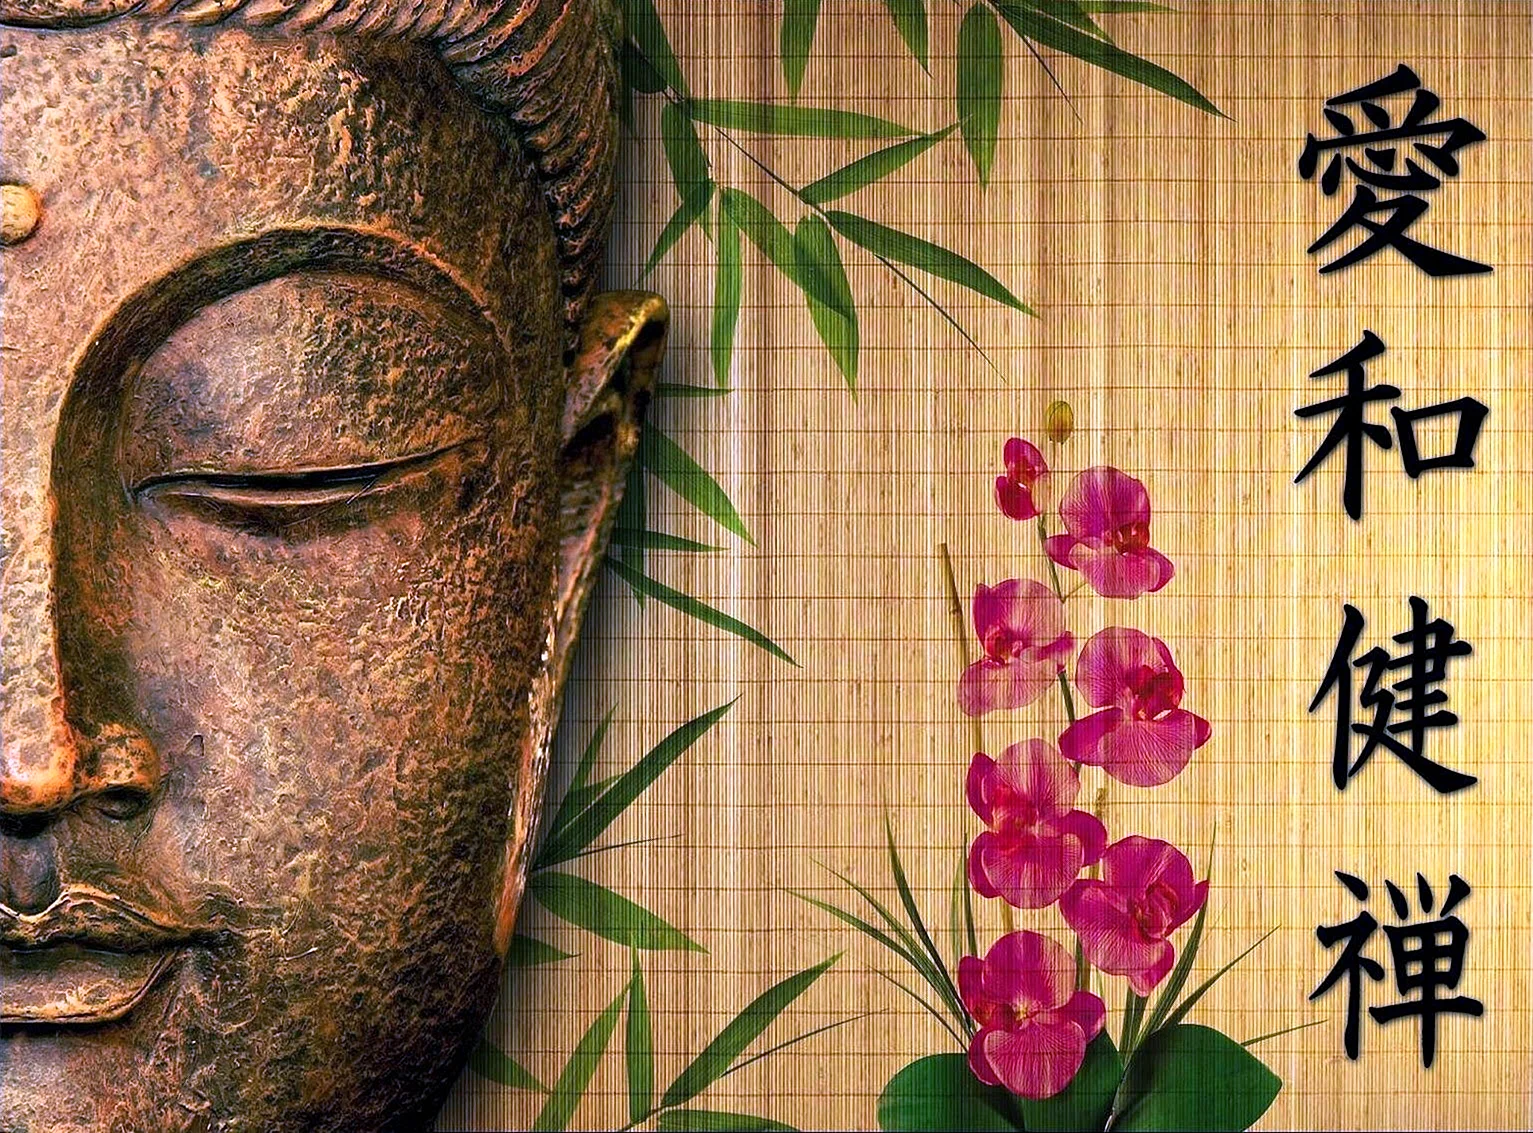 Buddha Wallpaper